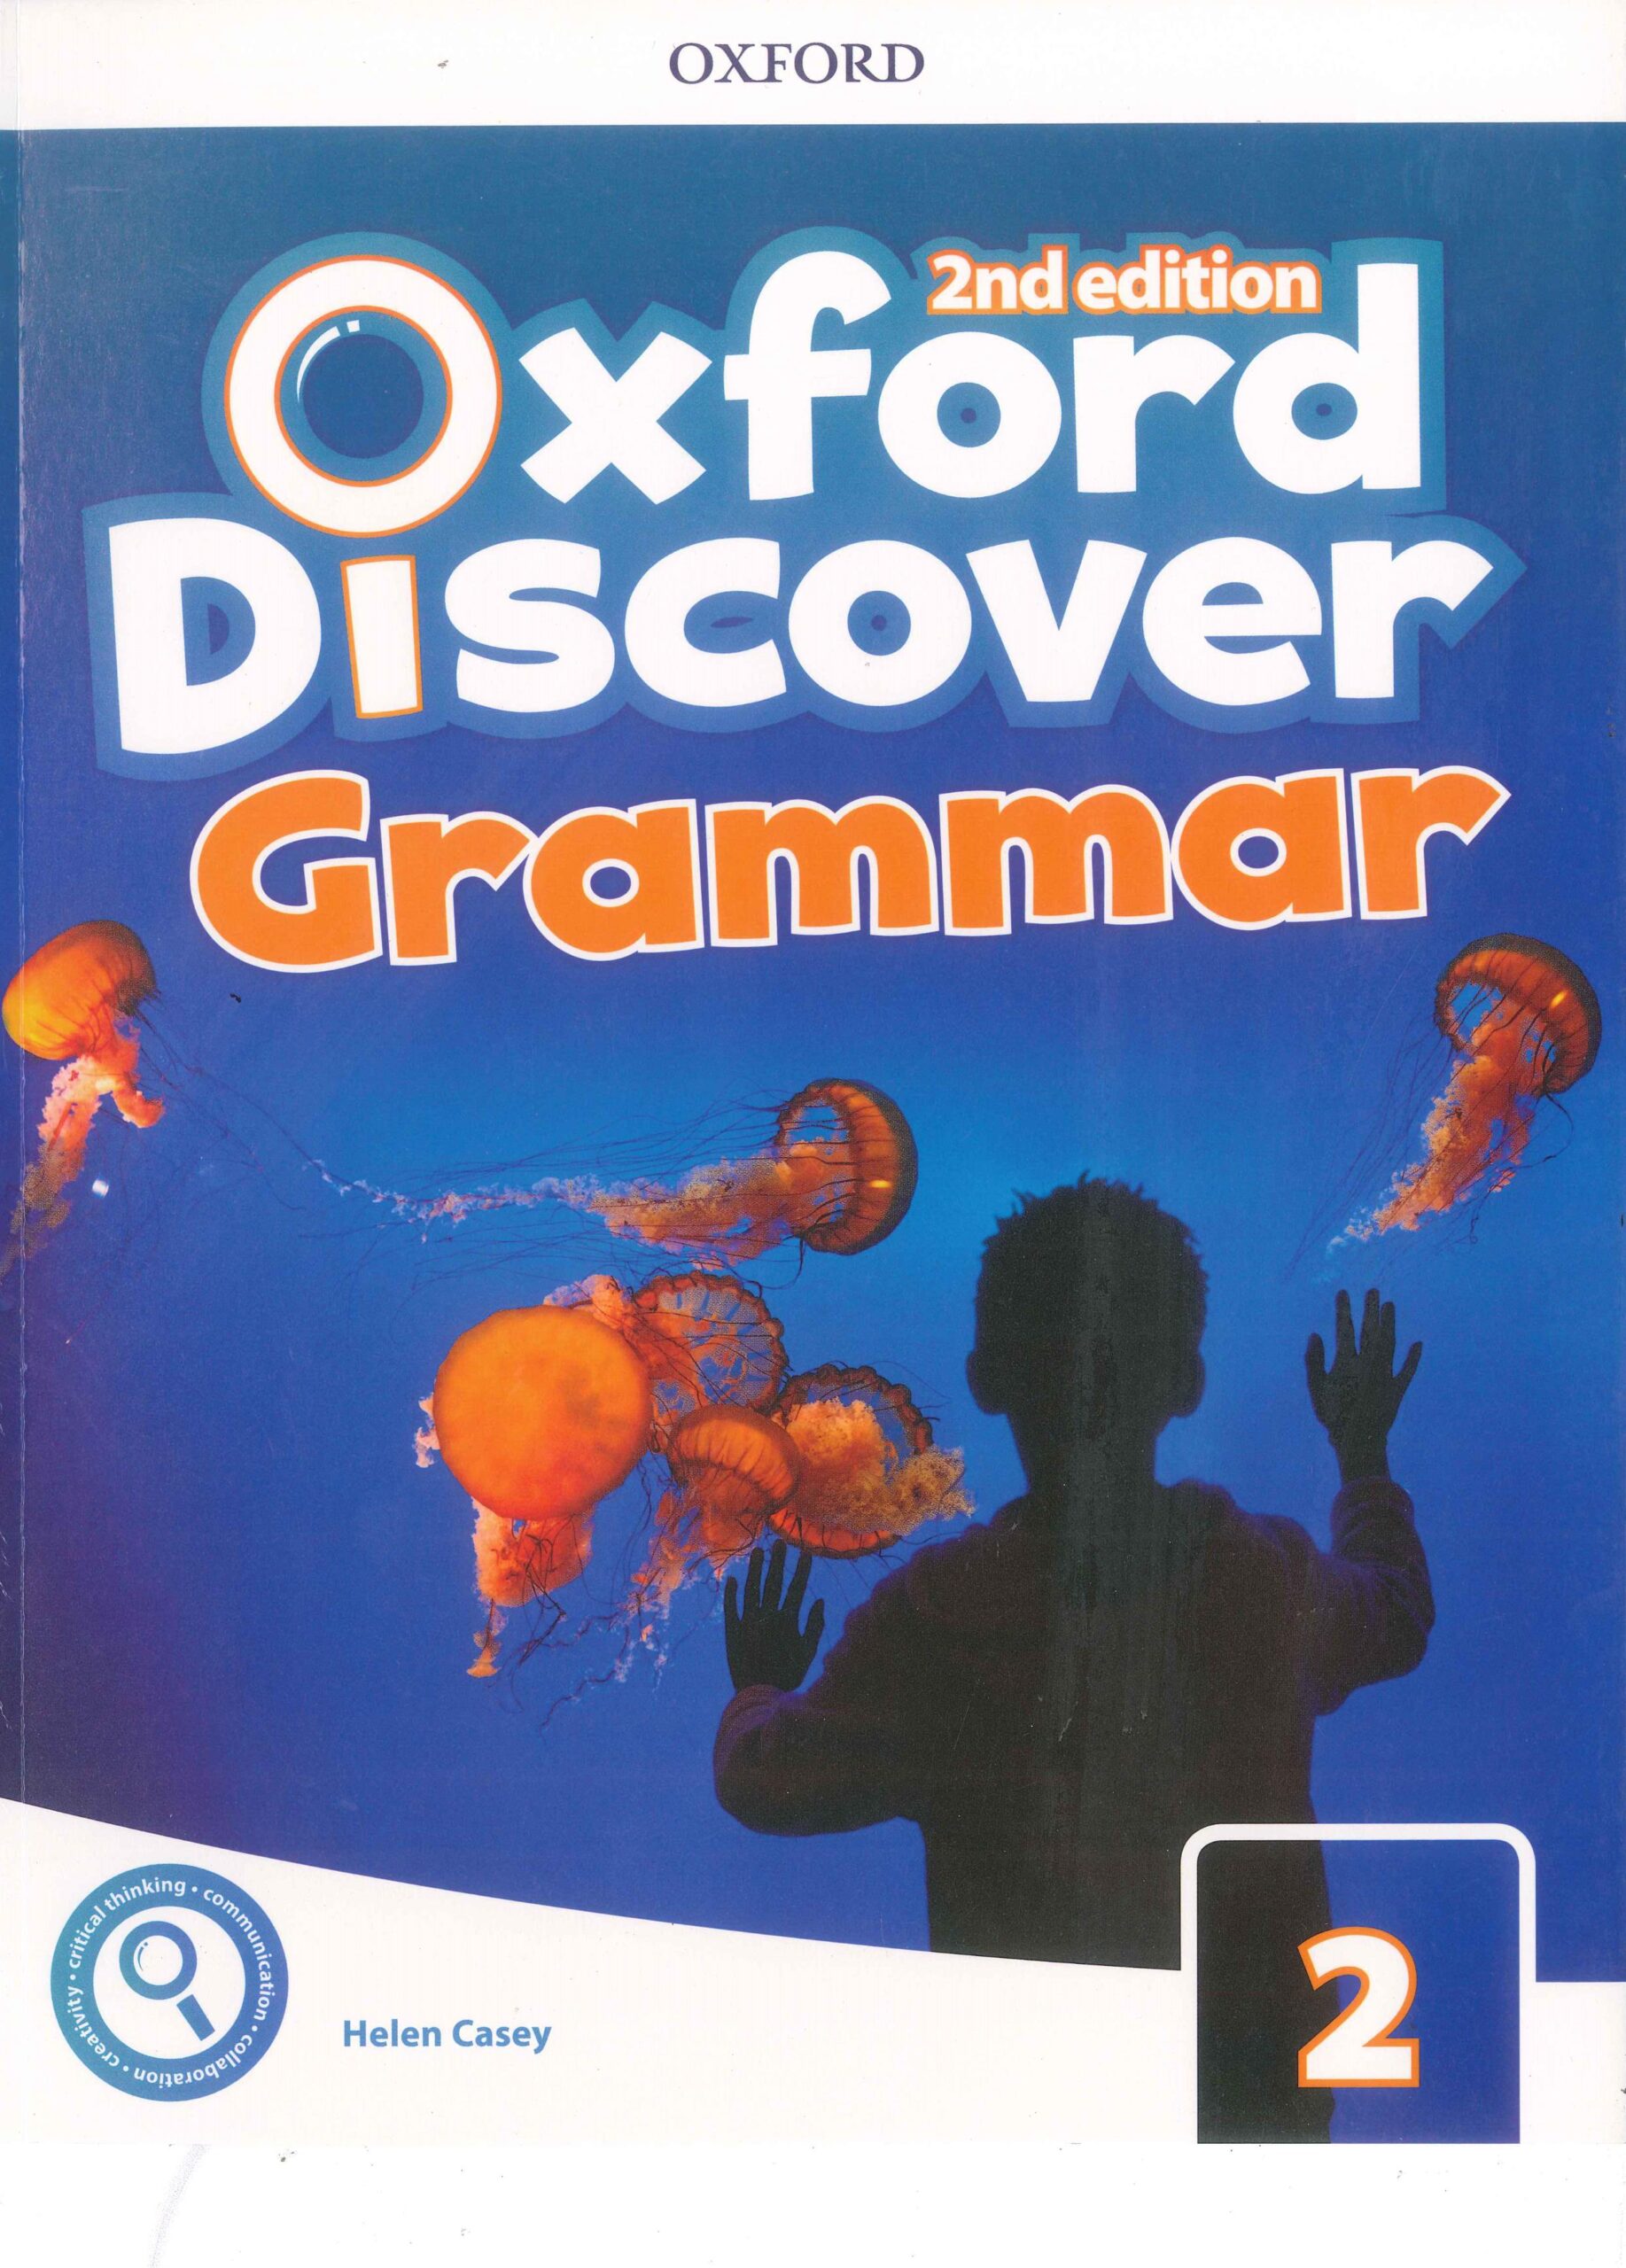 Oxford discover book. Oxford discover 2 second Edition. Oxford discover 1 student book 2nd Edition Audio. Oxford discover 2nd Edition. Oxford discover 2nd Edition 2 Grammar.